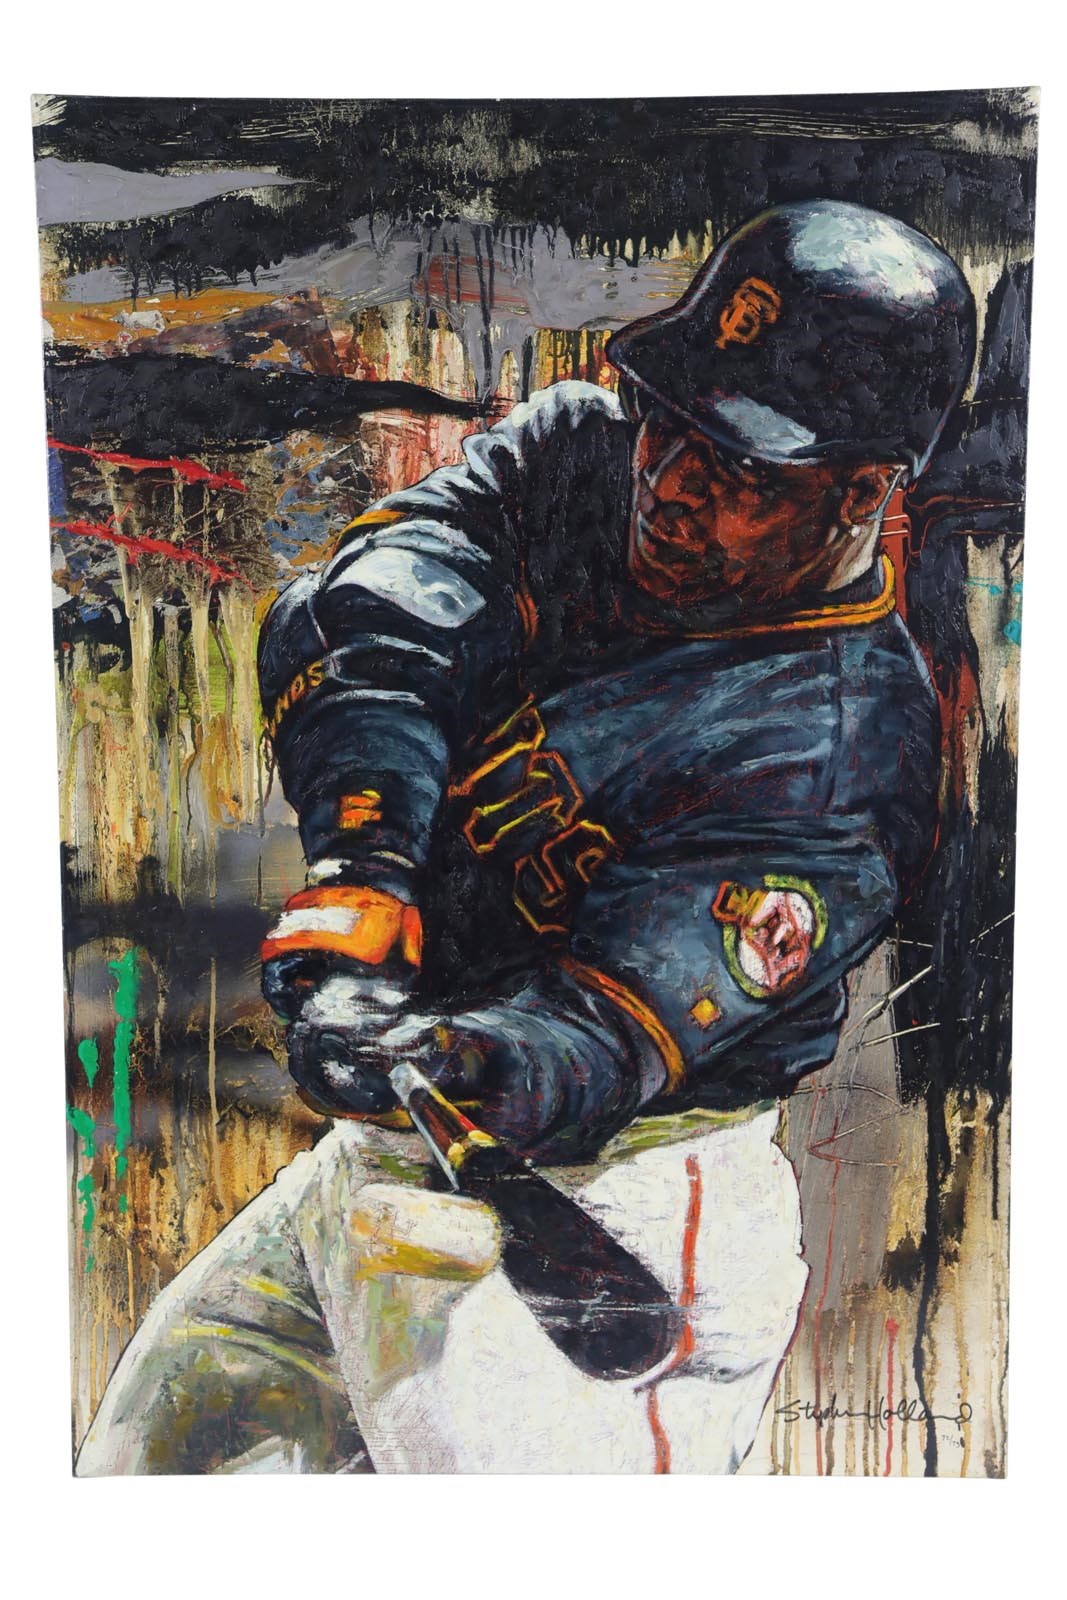 - Barry Bonds 73rd Home Run Giclee Artwork by Stephen Holland